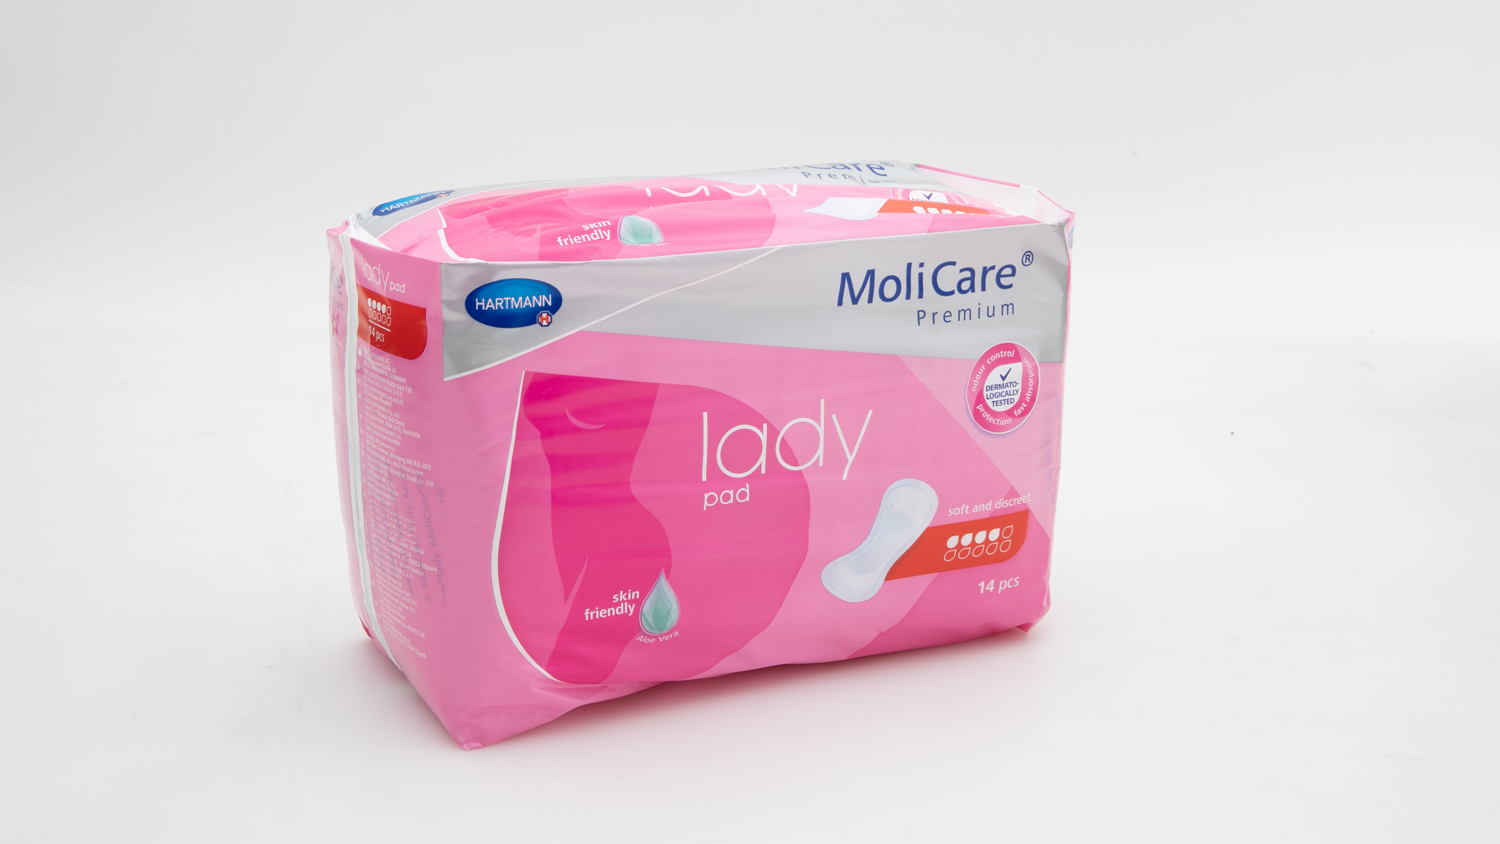 Moli Care Premium Lady Pad 4 drops carousel image